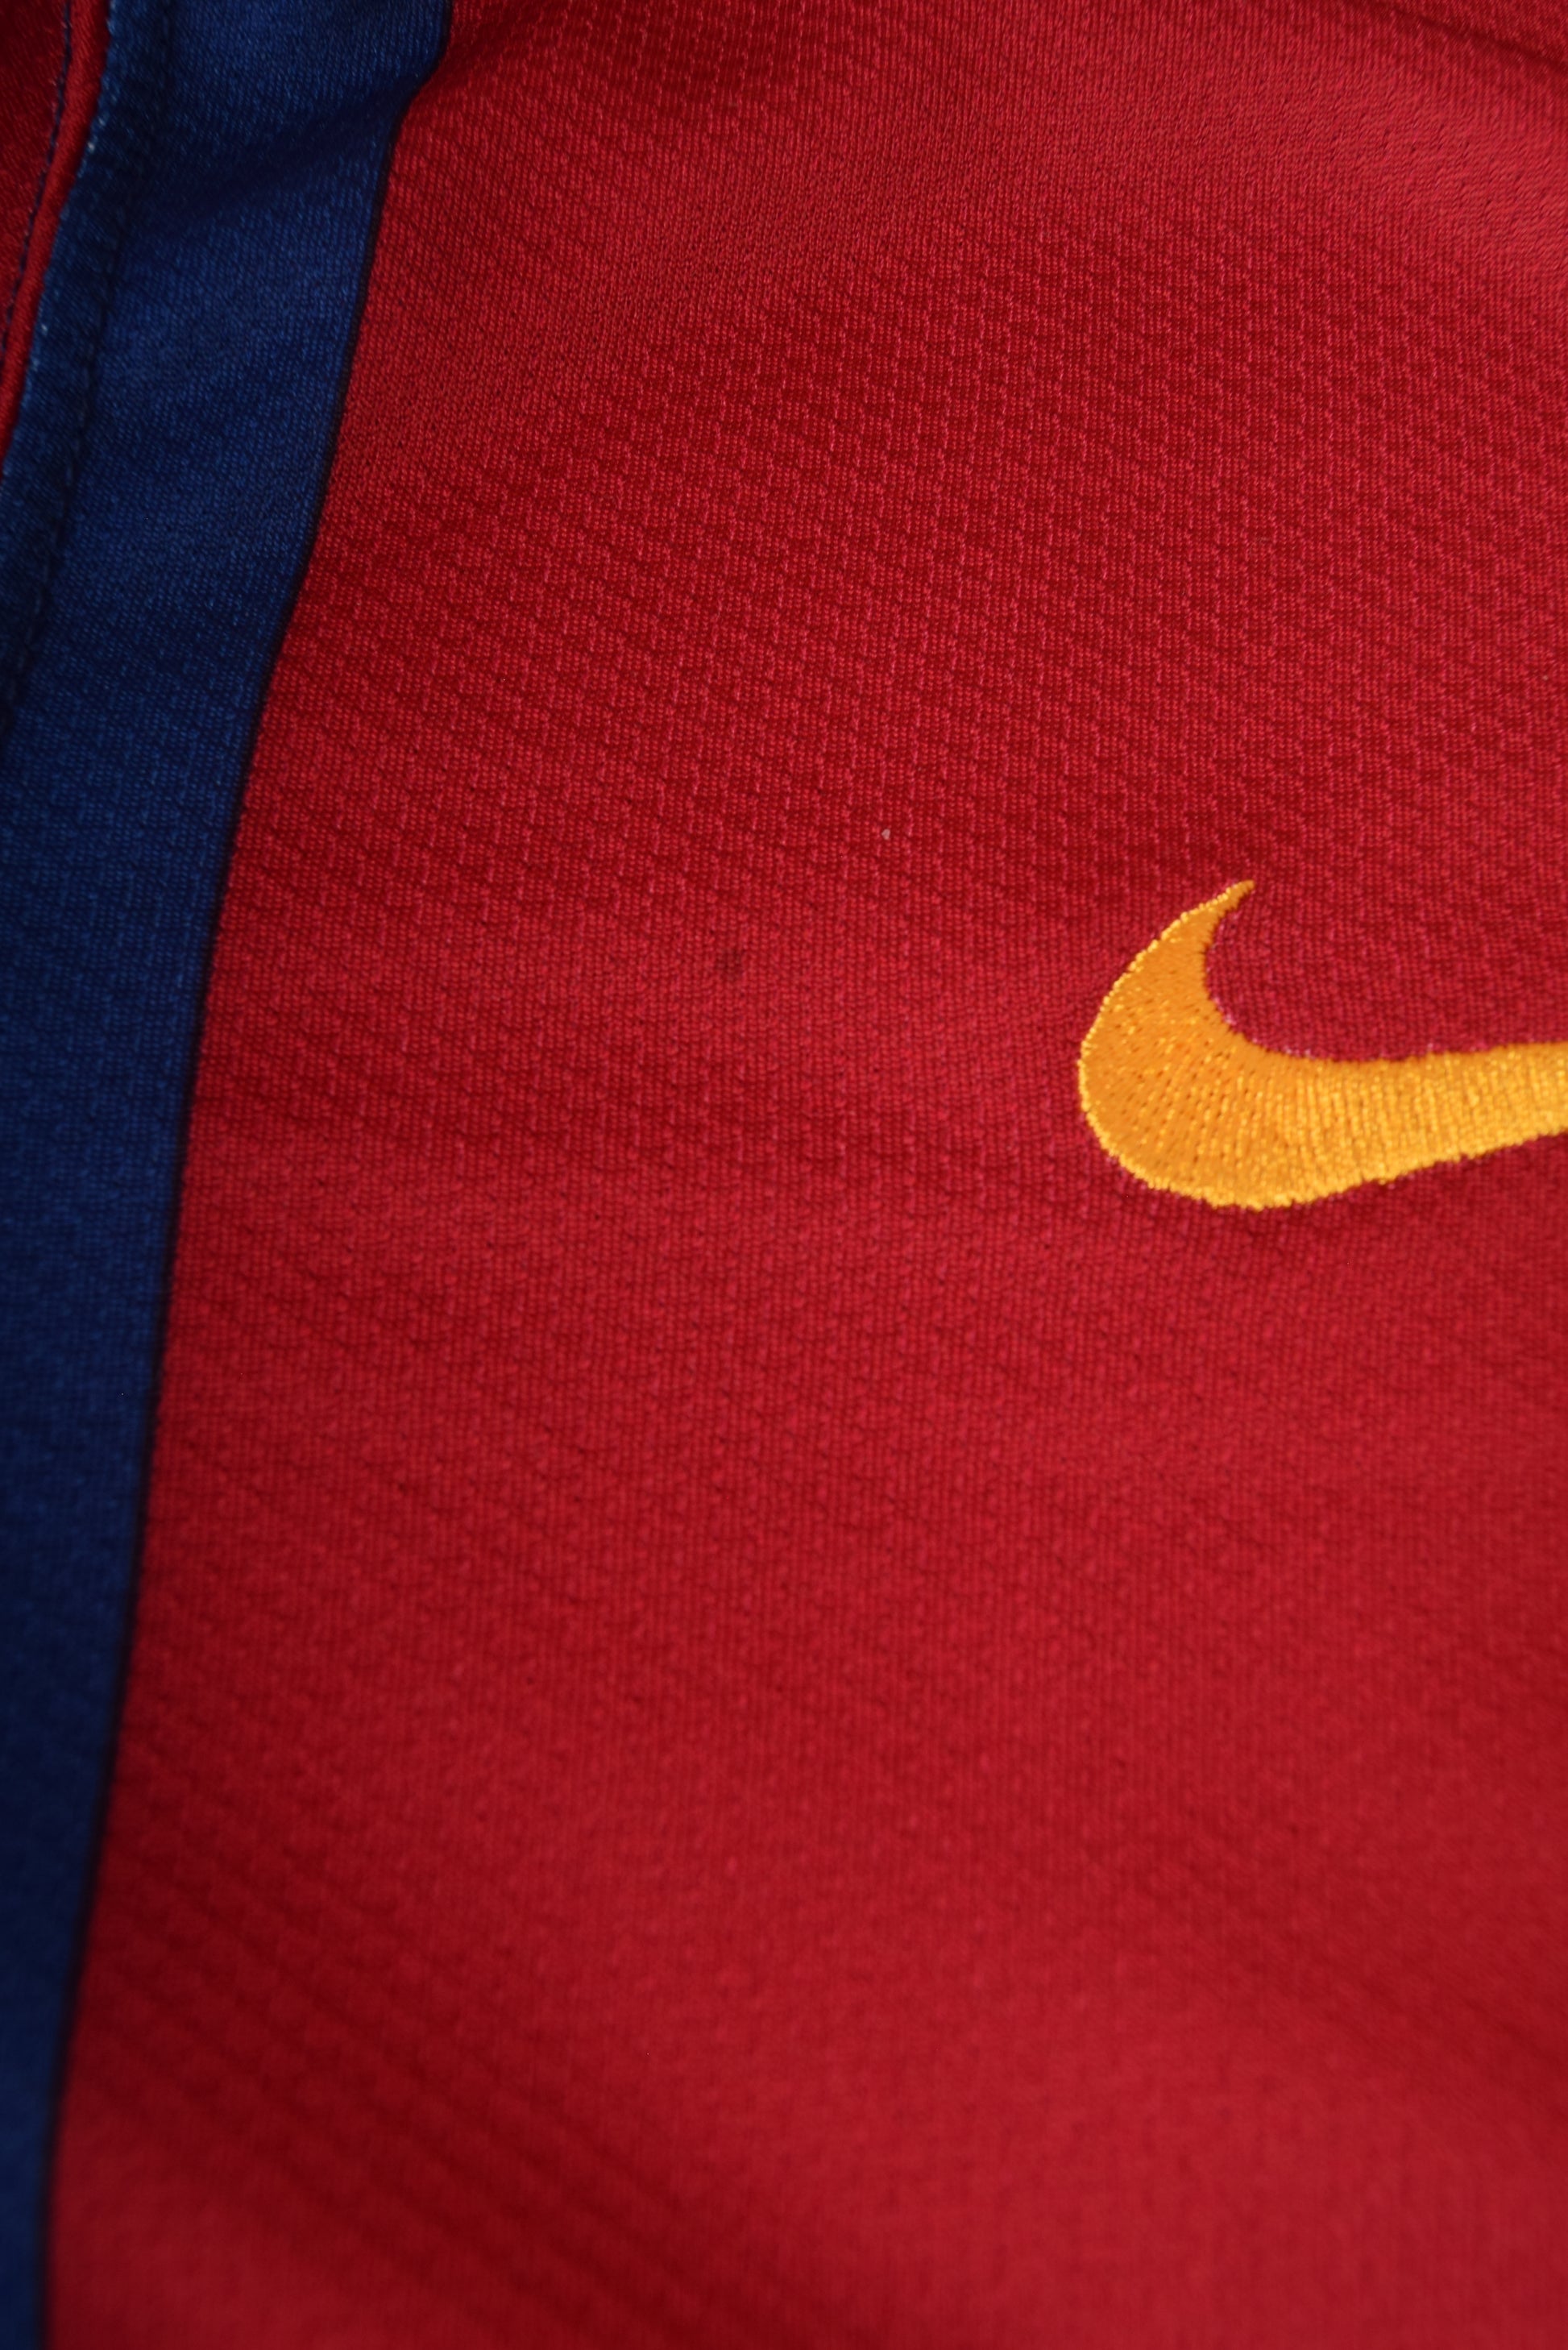 Barcelona Nike Home Football Shirt 2007-2008 Camp Nou 1957-2007